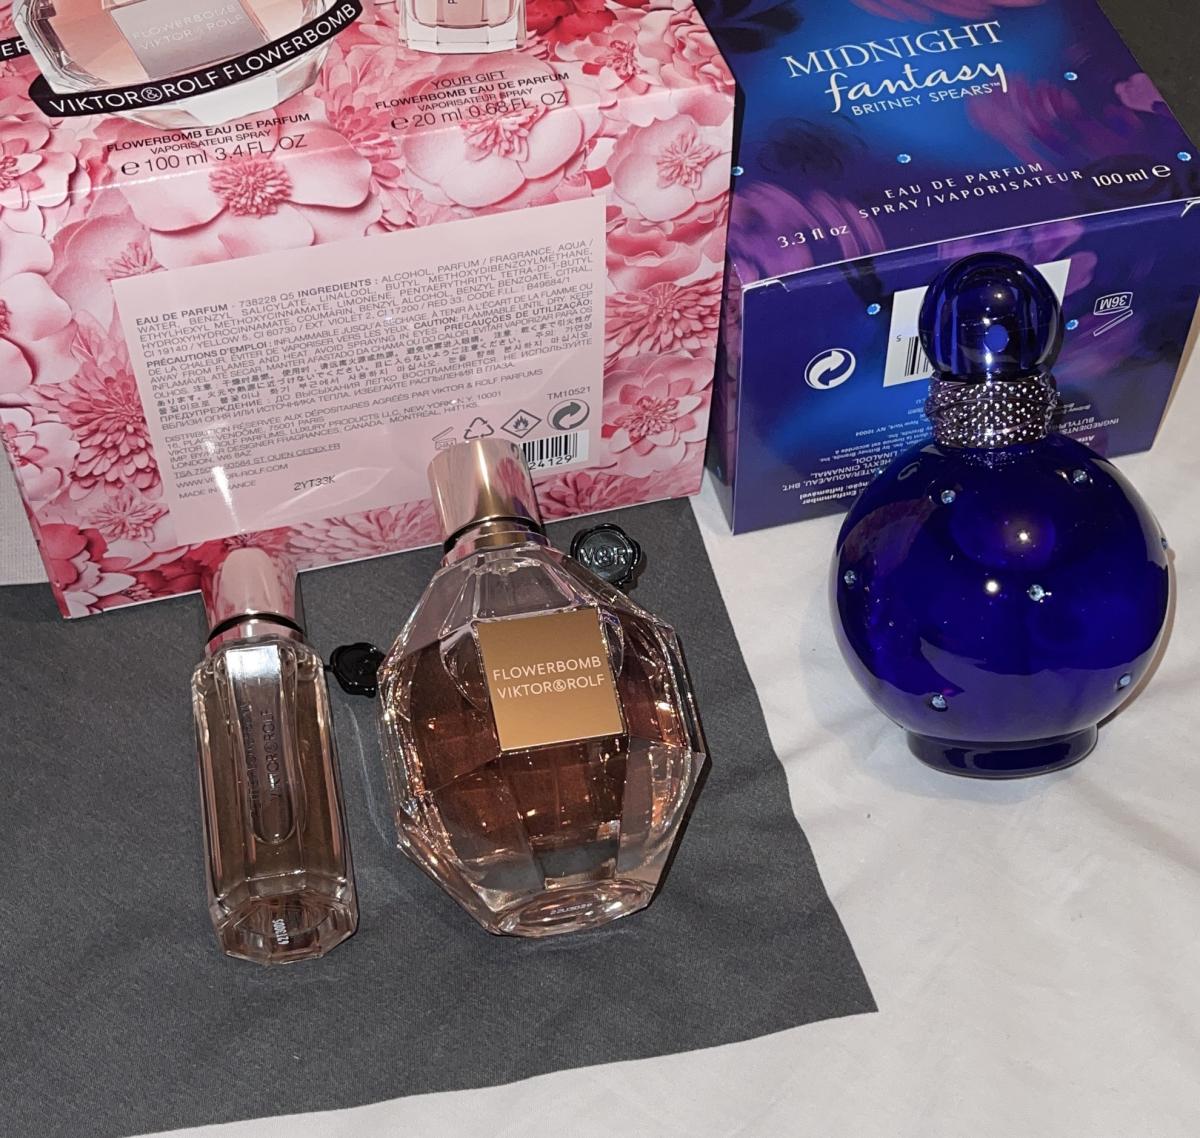 Midnight Fantasy Britney Spears perfume - a fragrance for women 2006